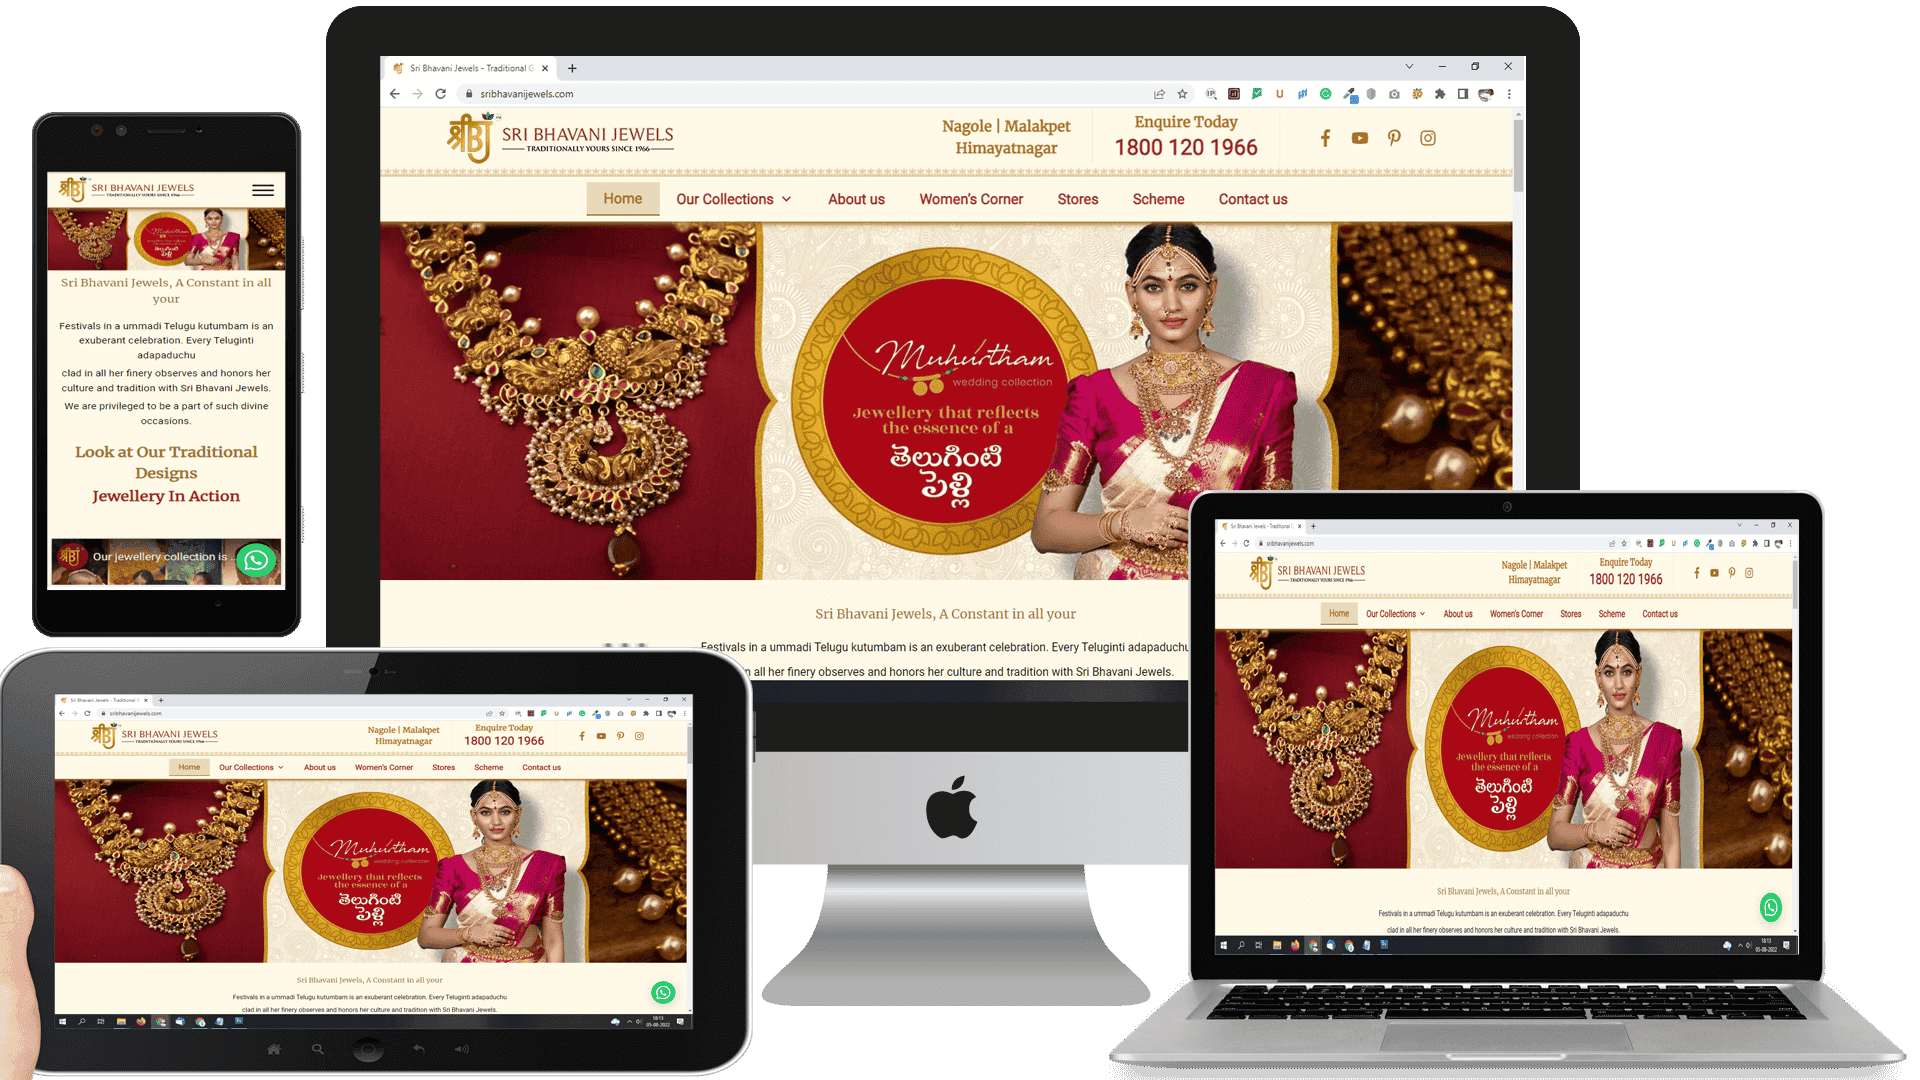 Sri Bhavani Jewels